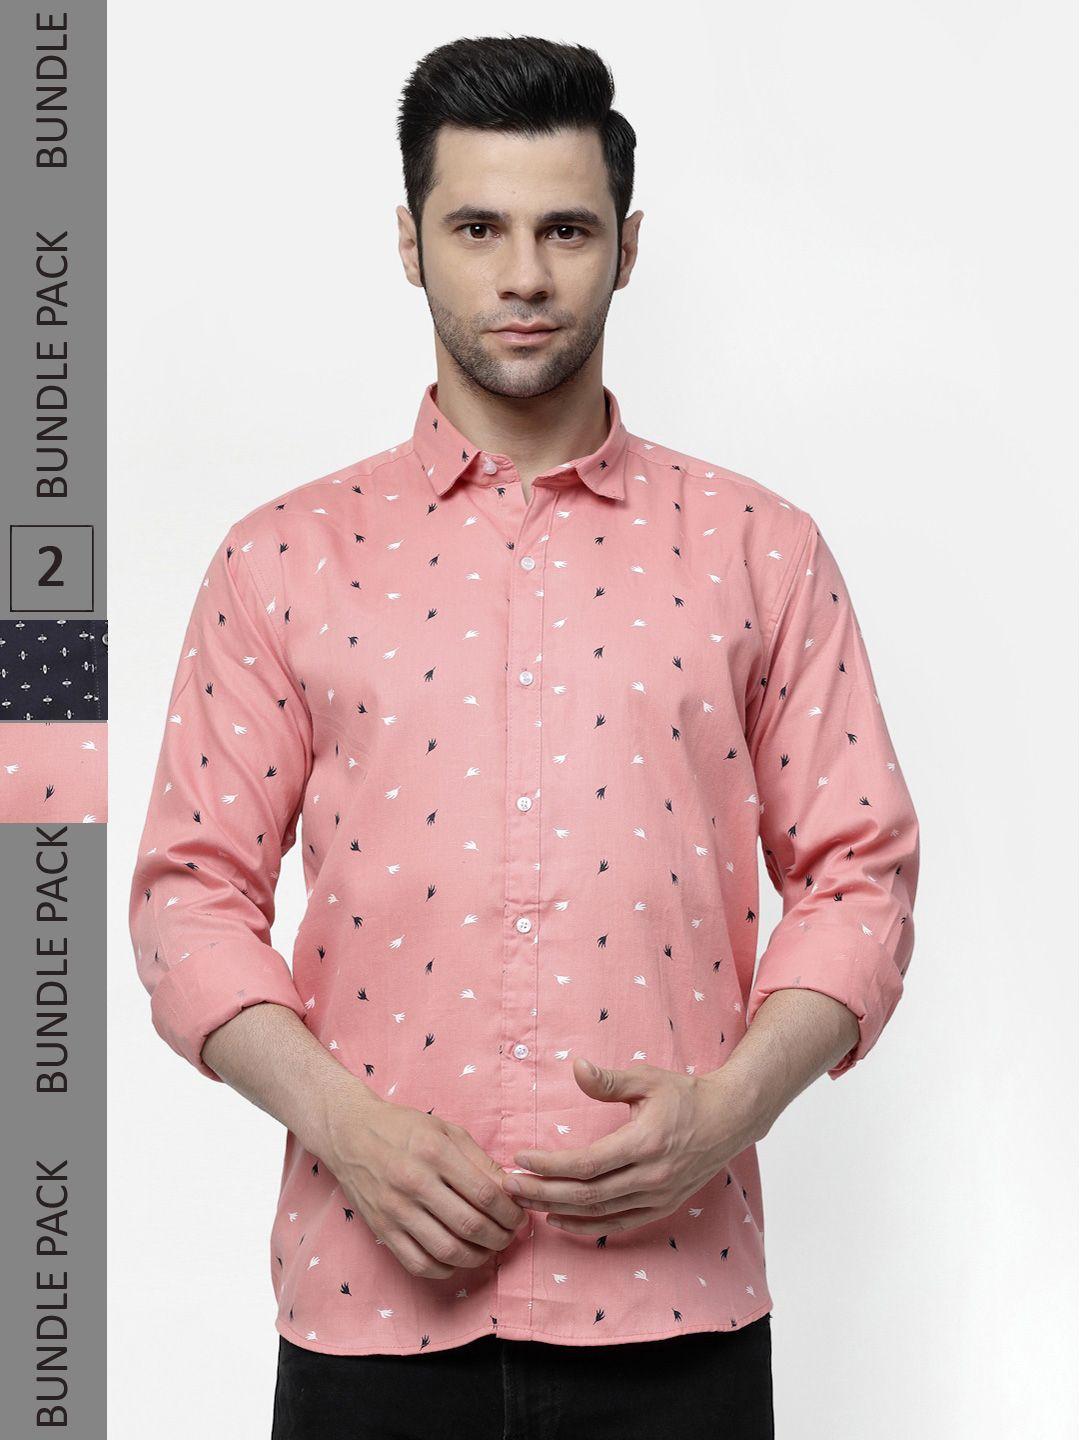 allan peter pack of 2 conversational printed cotton casual shirt